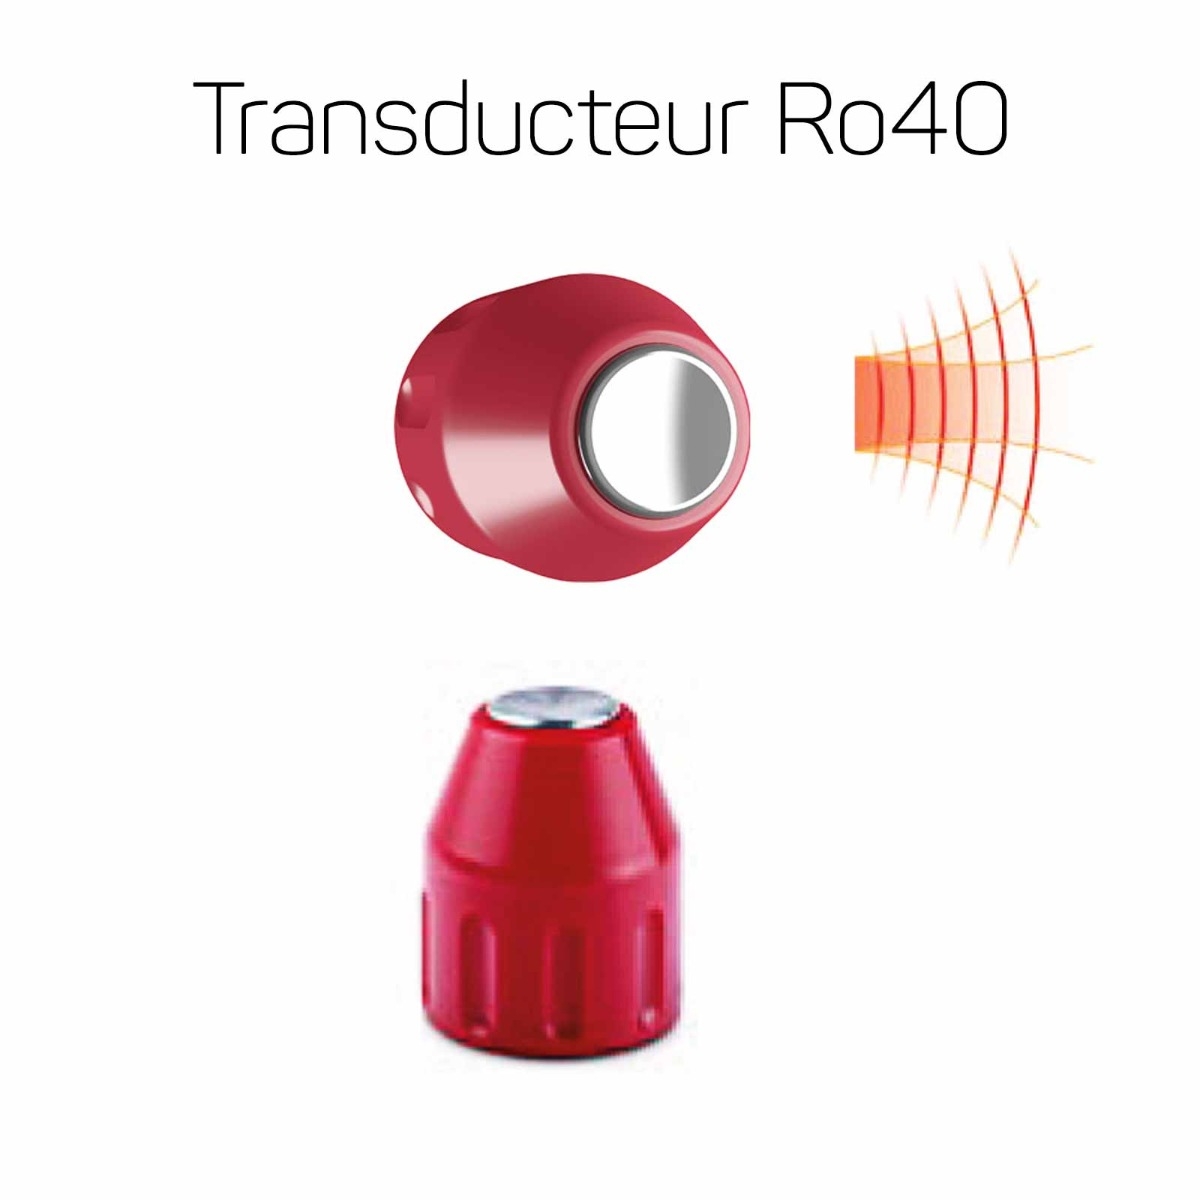 Transducteur Ro40 15mm rouge